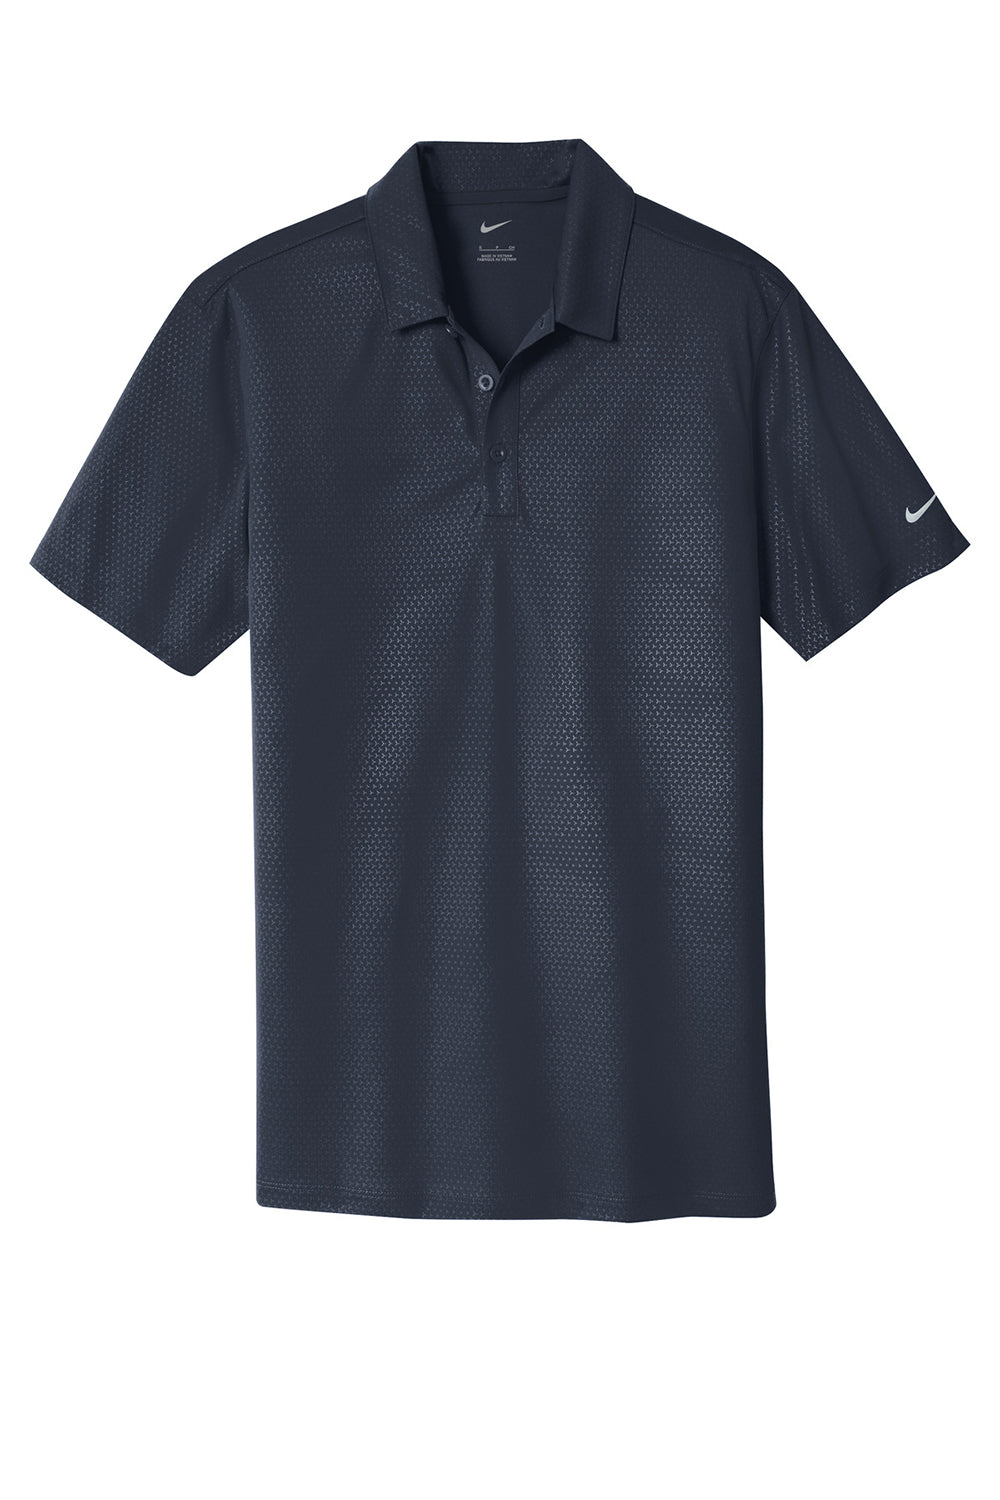 Nike 838964 Mens Dri-Fit Moisture Wicking Short Sleeve Polo Shirt Marine Blue Flat Front